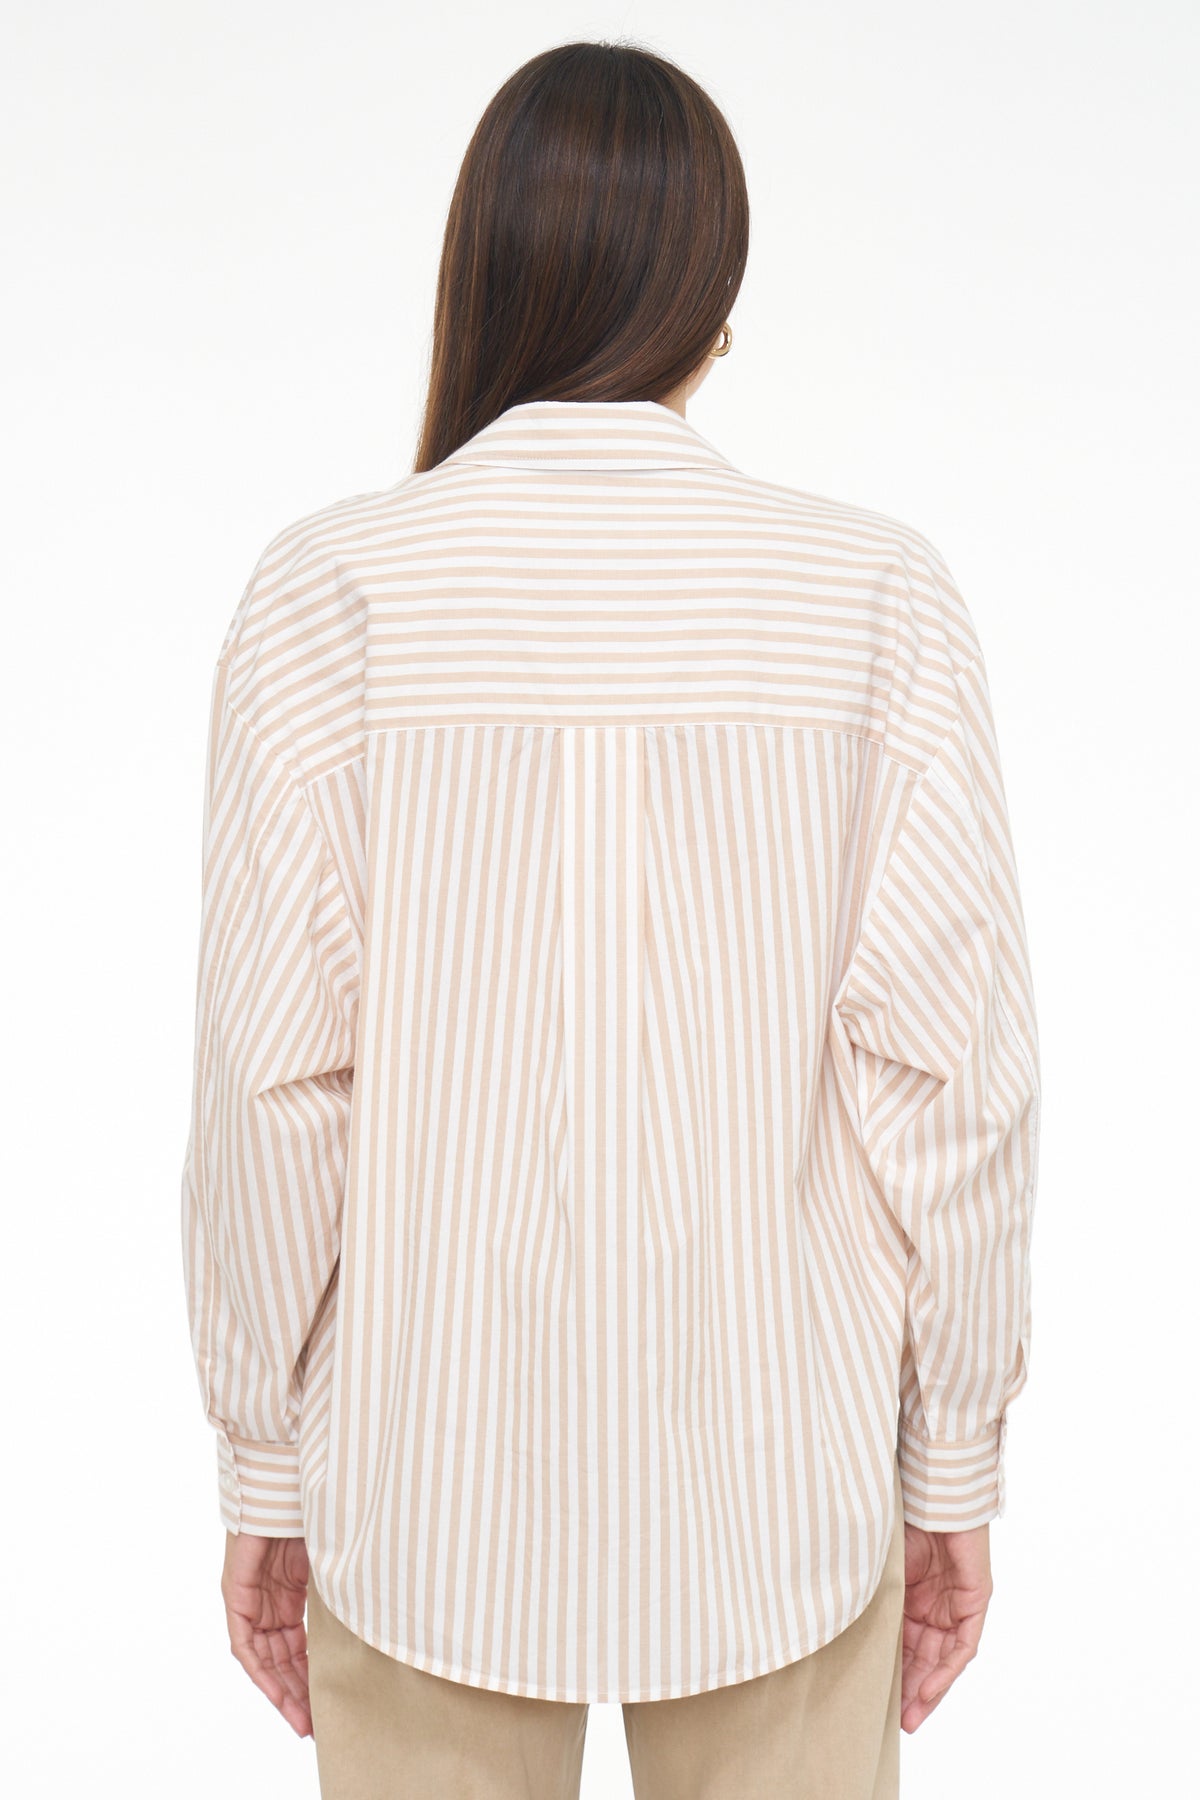 Sloane Oversized Button Down Shirt - Tan Ecru Stripe